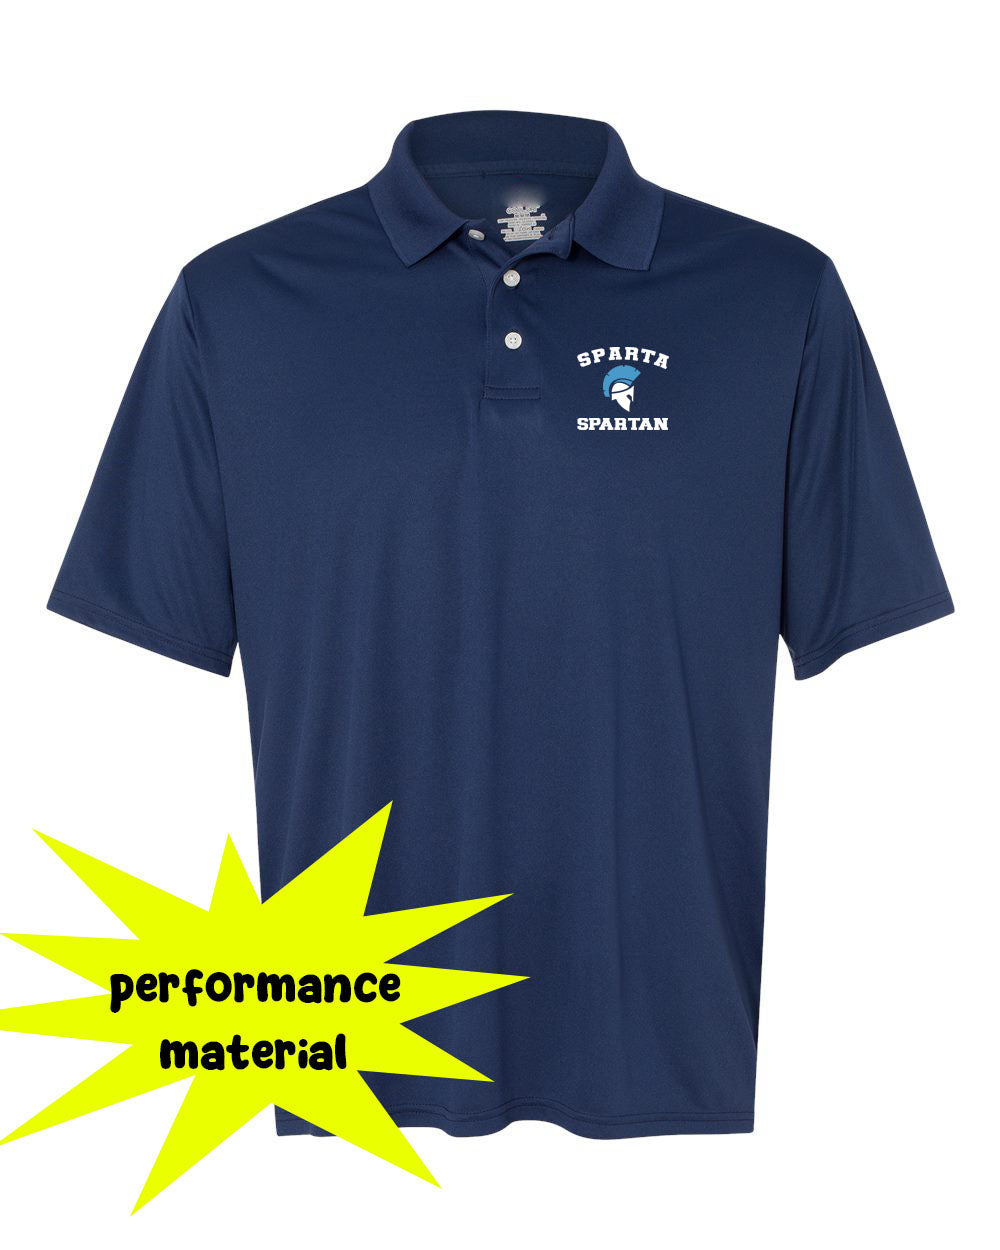 Sparta School Performance Material Polo T-Shirt Design 1